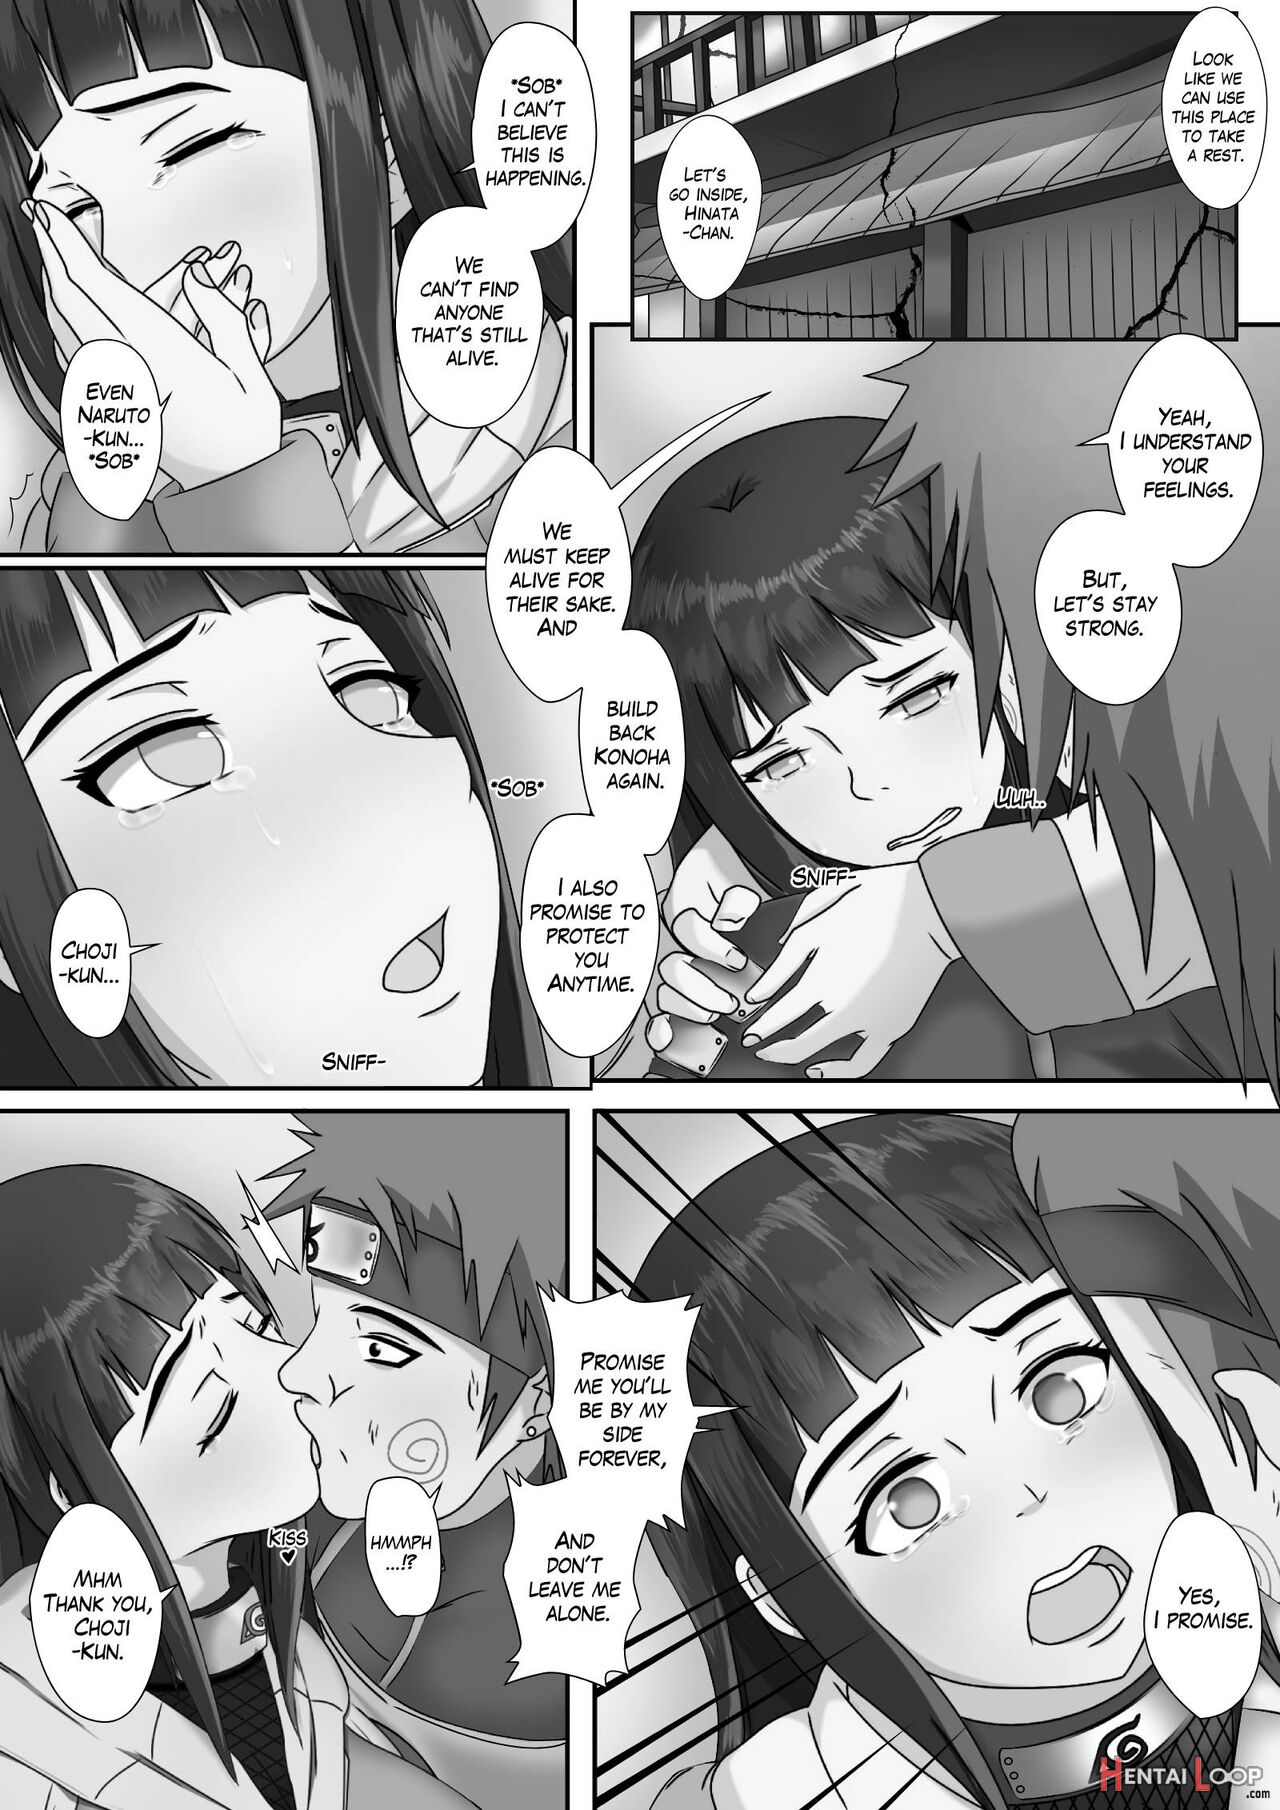 Hinata X Choji Mating Life After Konoha Gets Destroyed page 4